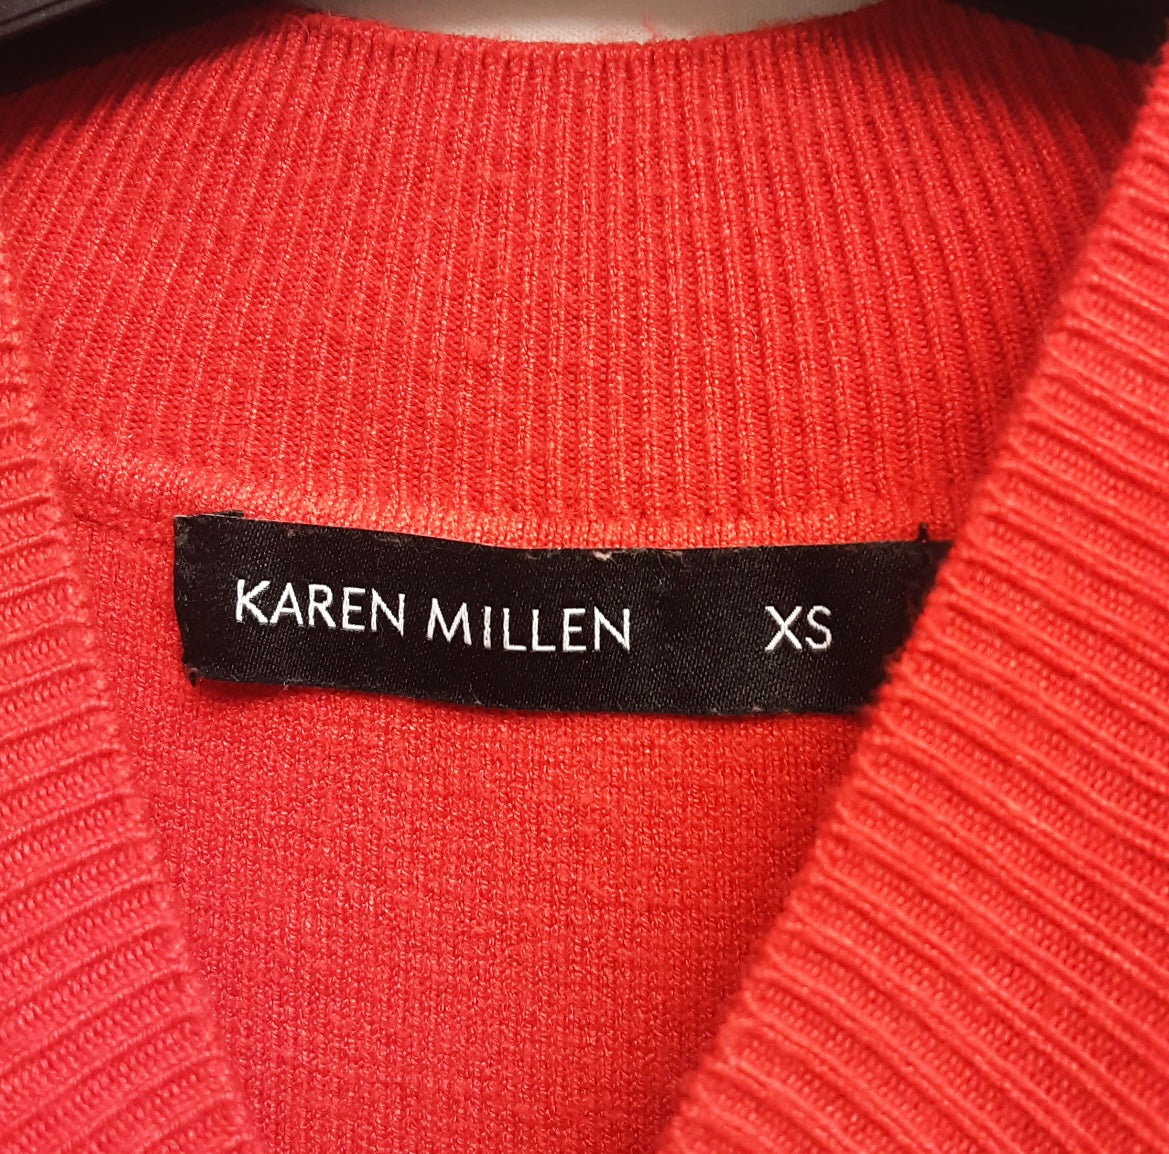 Karen Millen Red Wool 60's style Dress Size XS